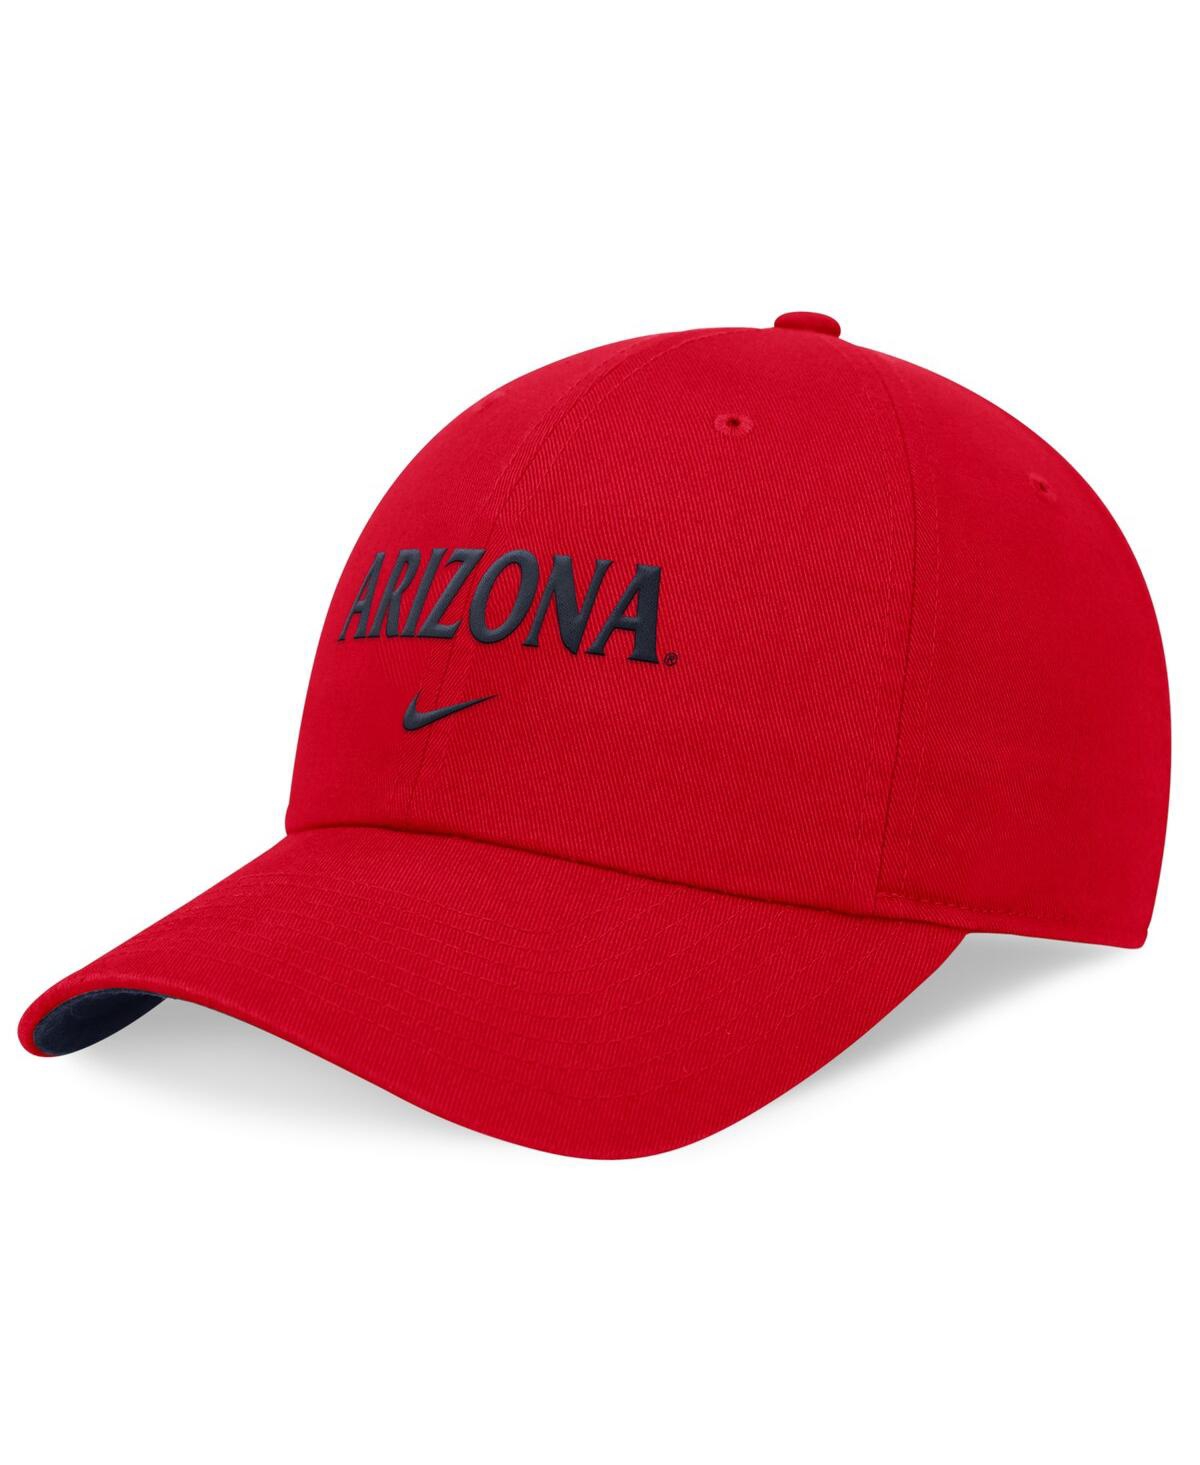 Men's and Women's Red Arizona Wildcats 2024 Sideline Club Adjustable Hat - Red